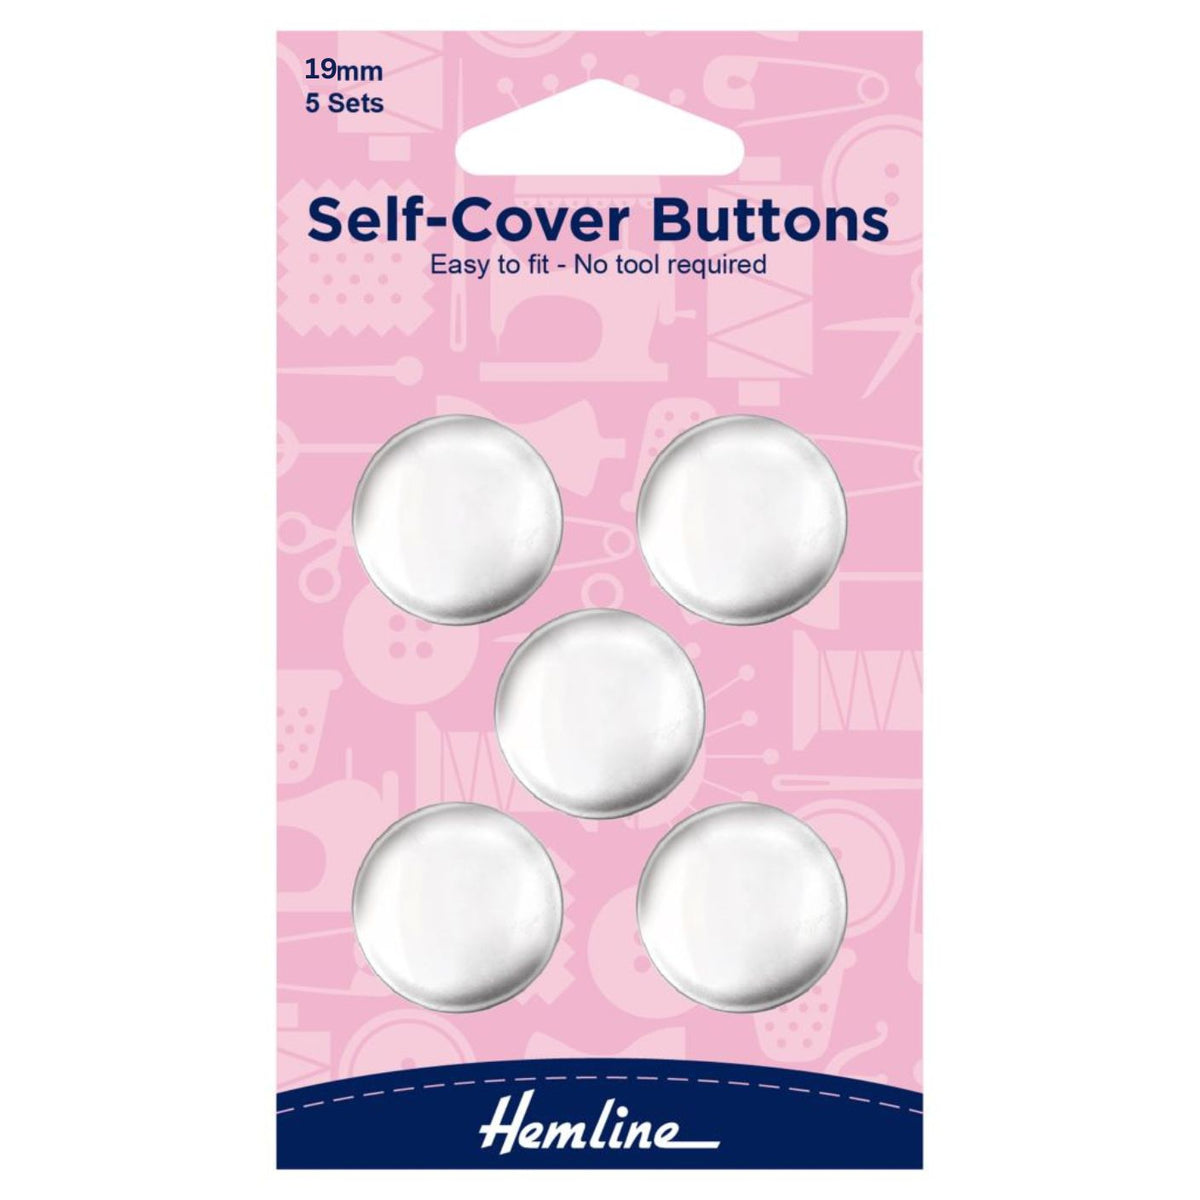 Hemline Self-Cover Buttons